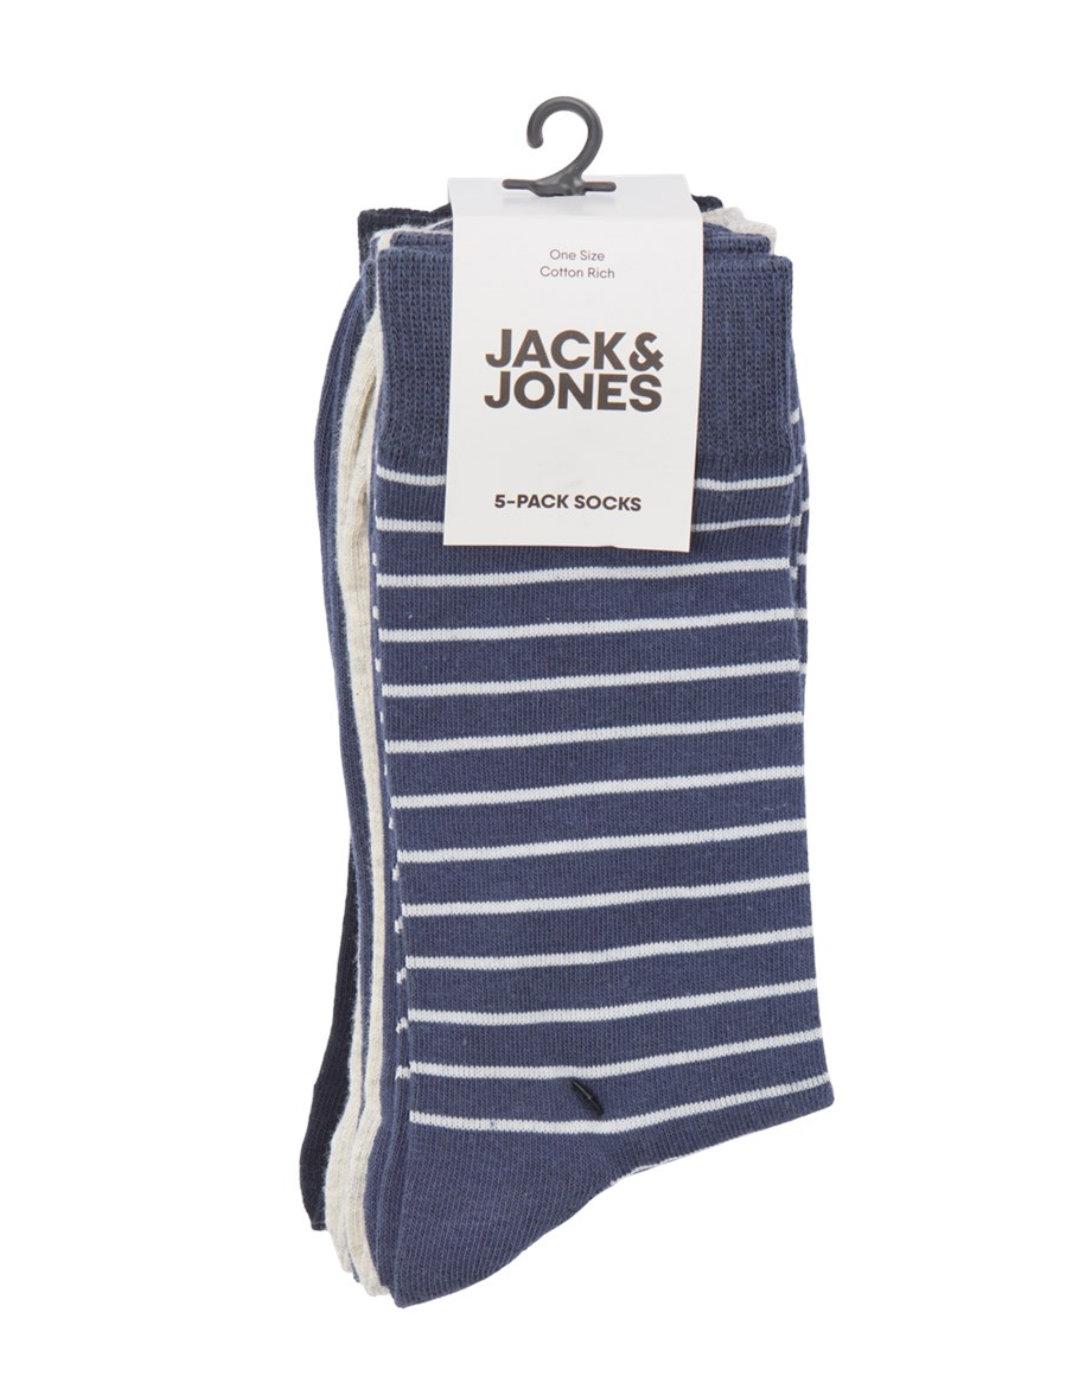 Calcetines Jack&Jones pack 5 marino/gris altos hombre